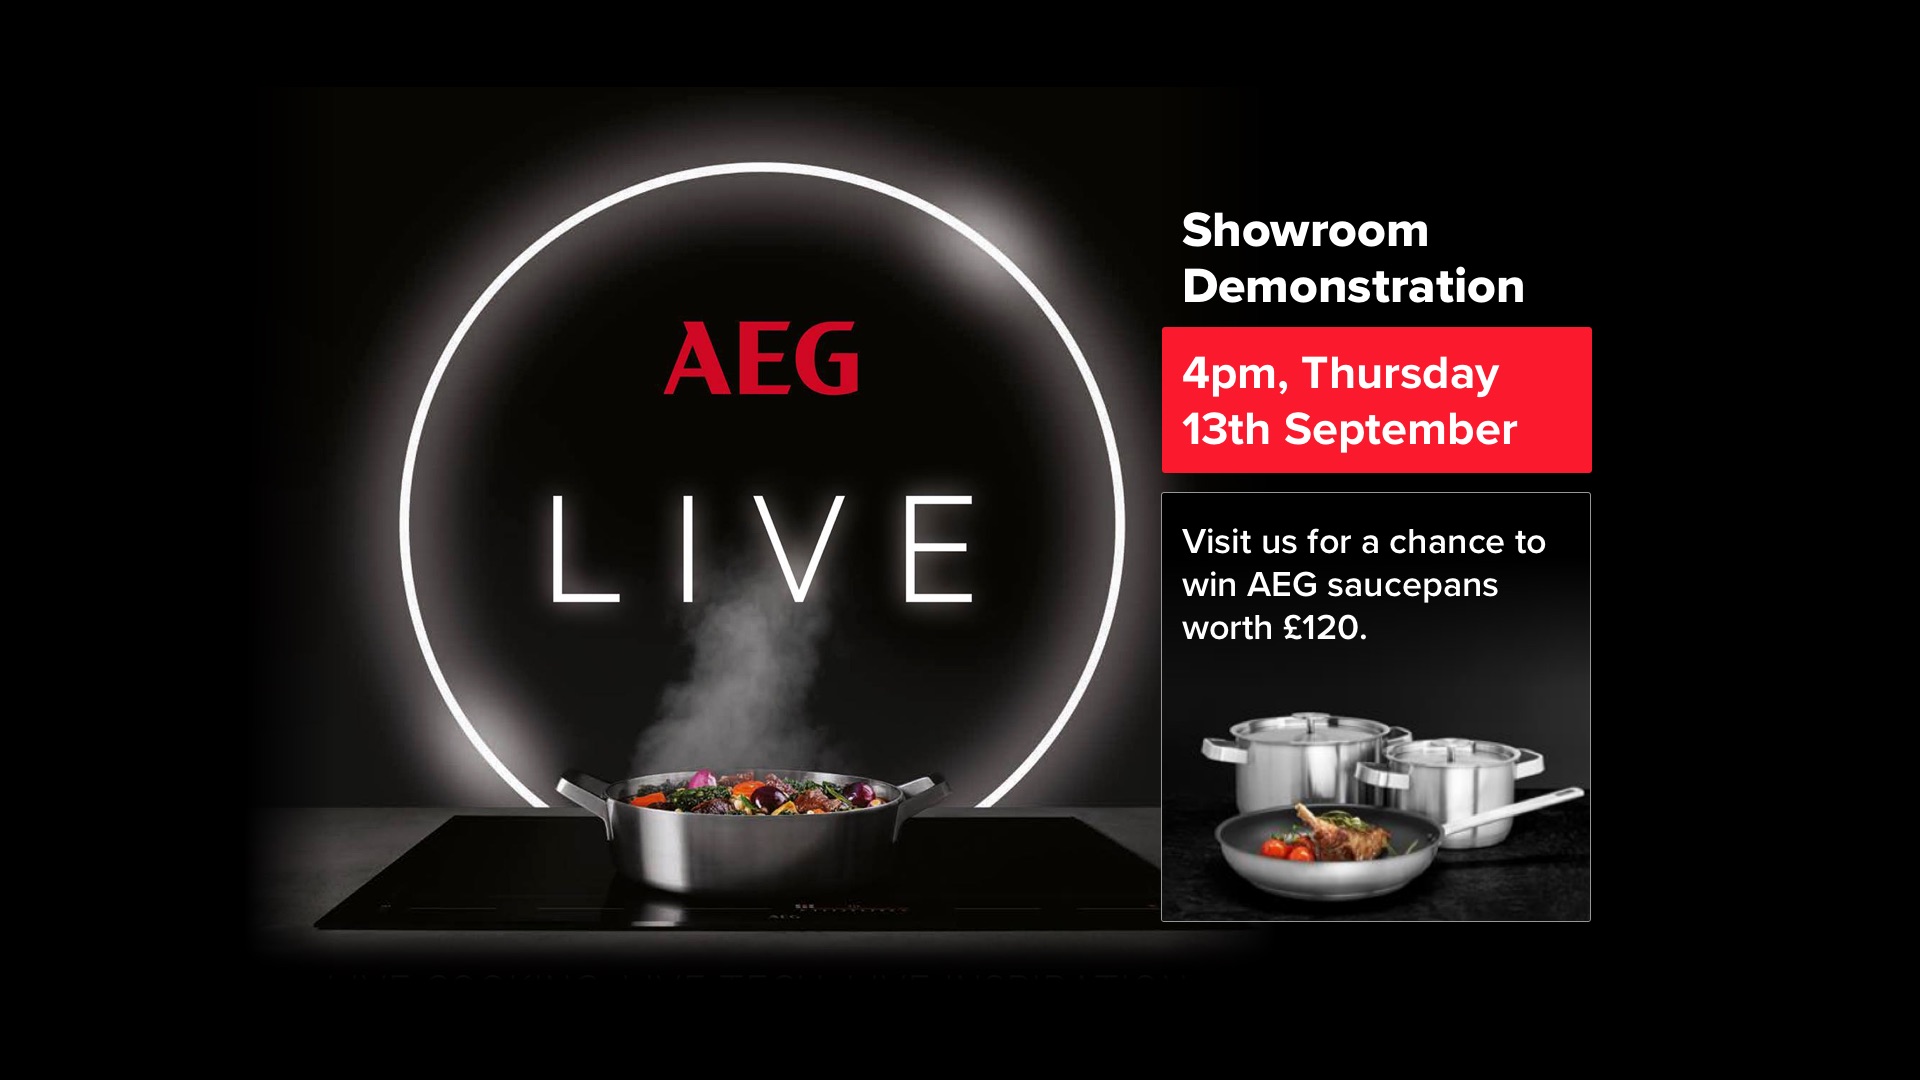 aeg-live-showroom-demonstration-event-large